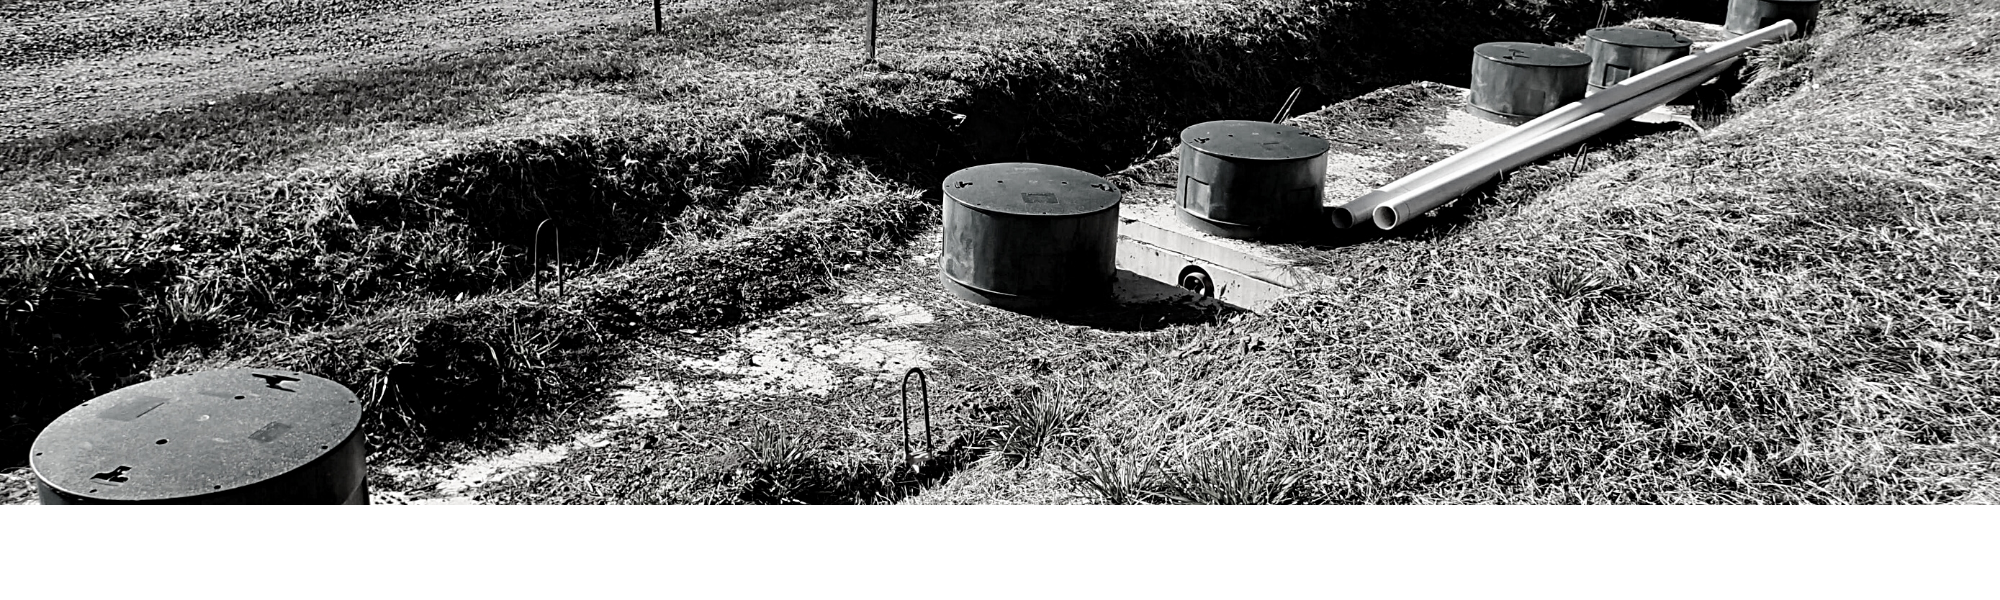 septic holding tanks